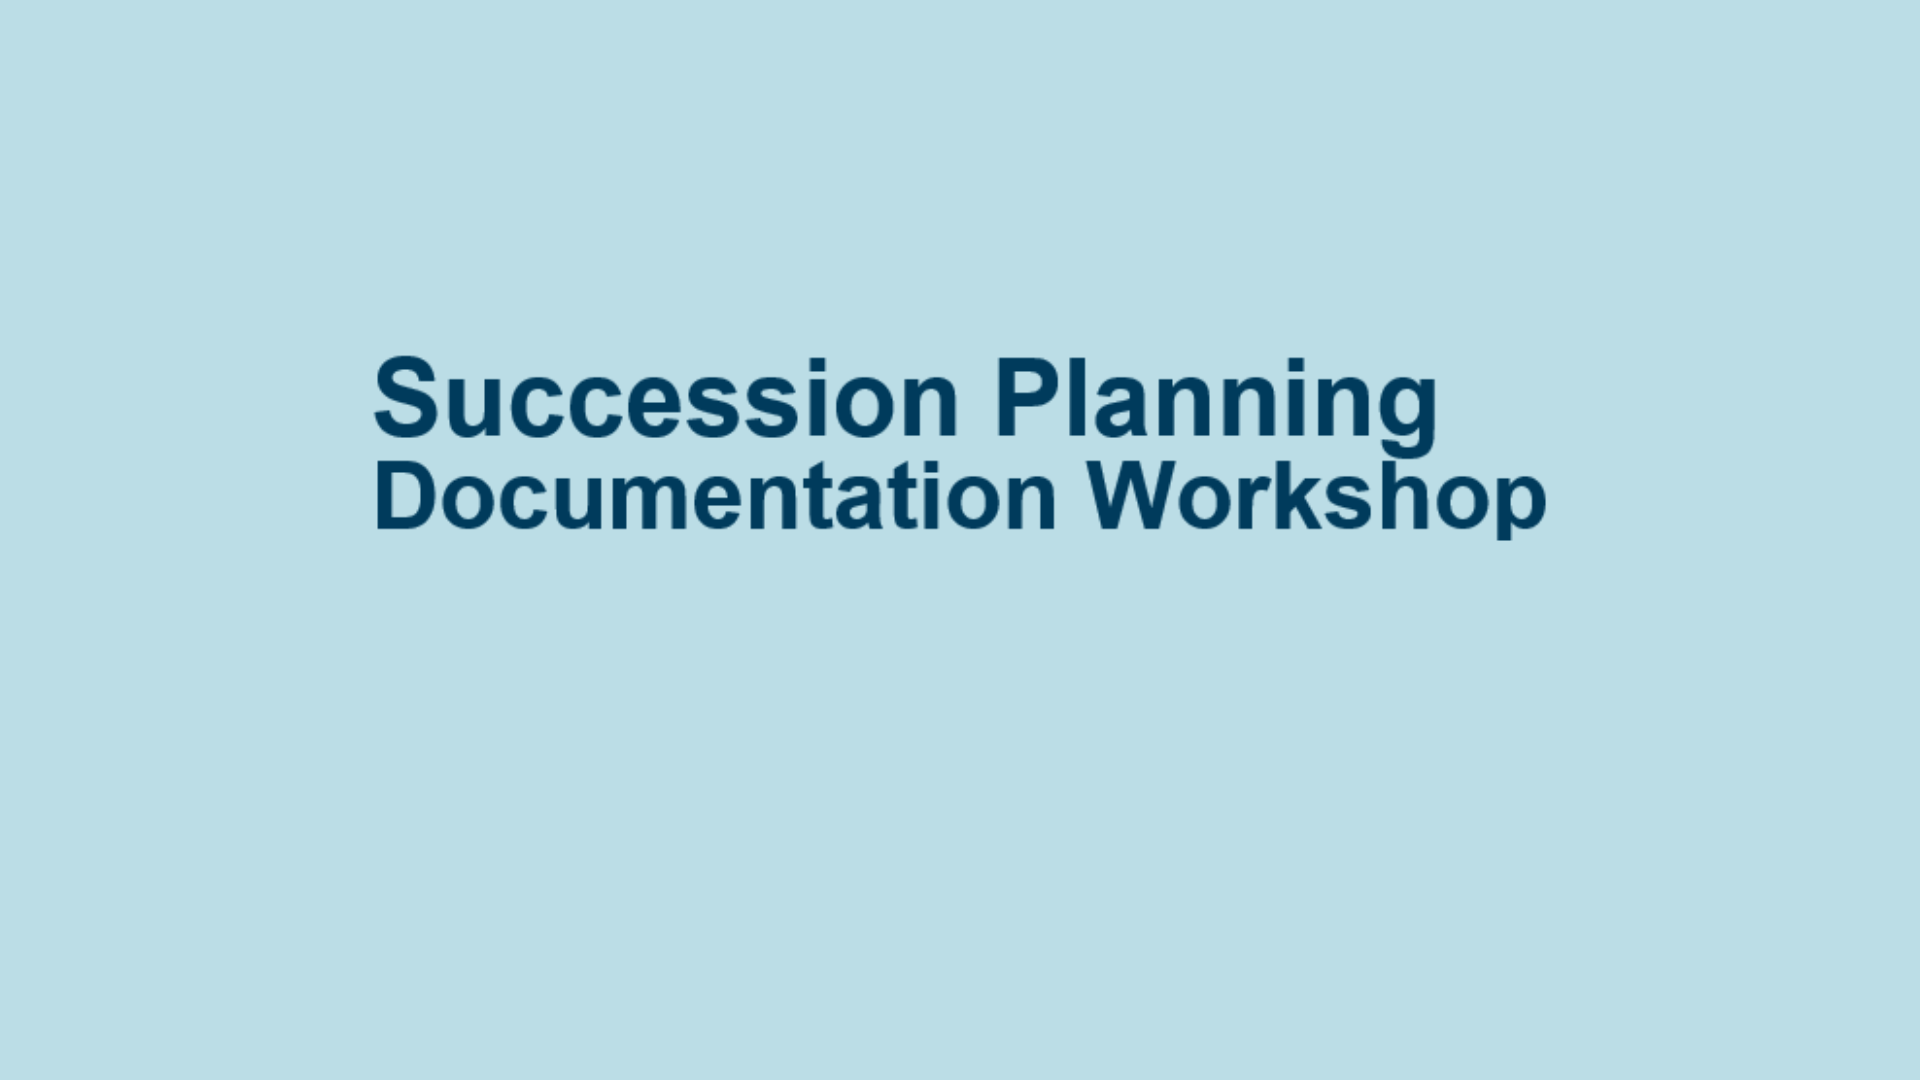 Succession Planning Documentation Workshop for Agency Relations